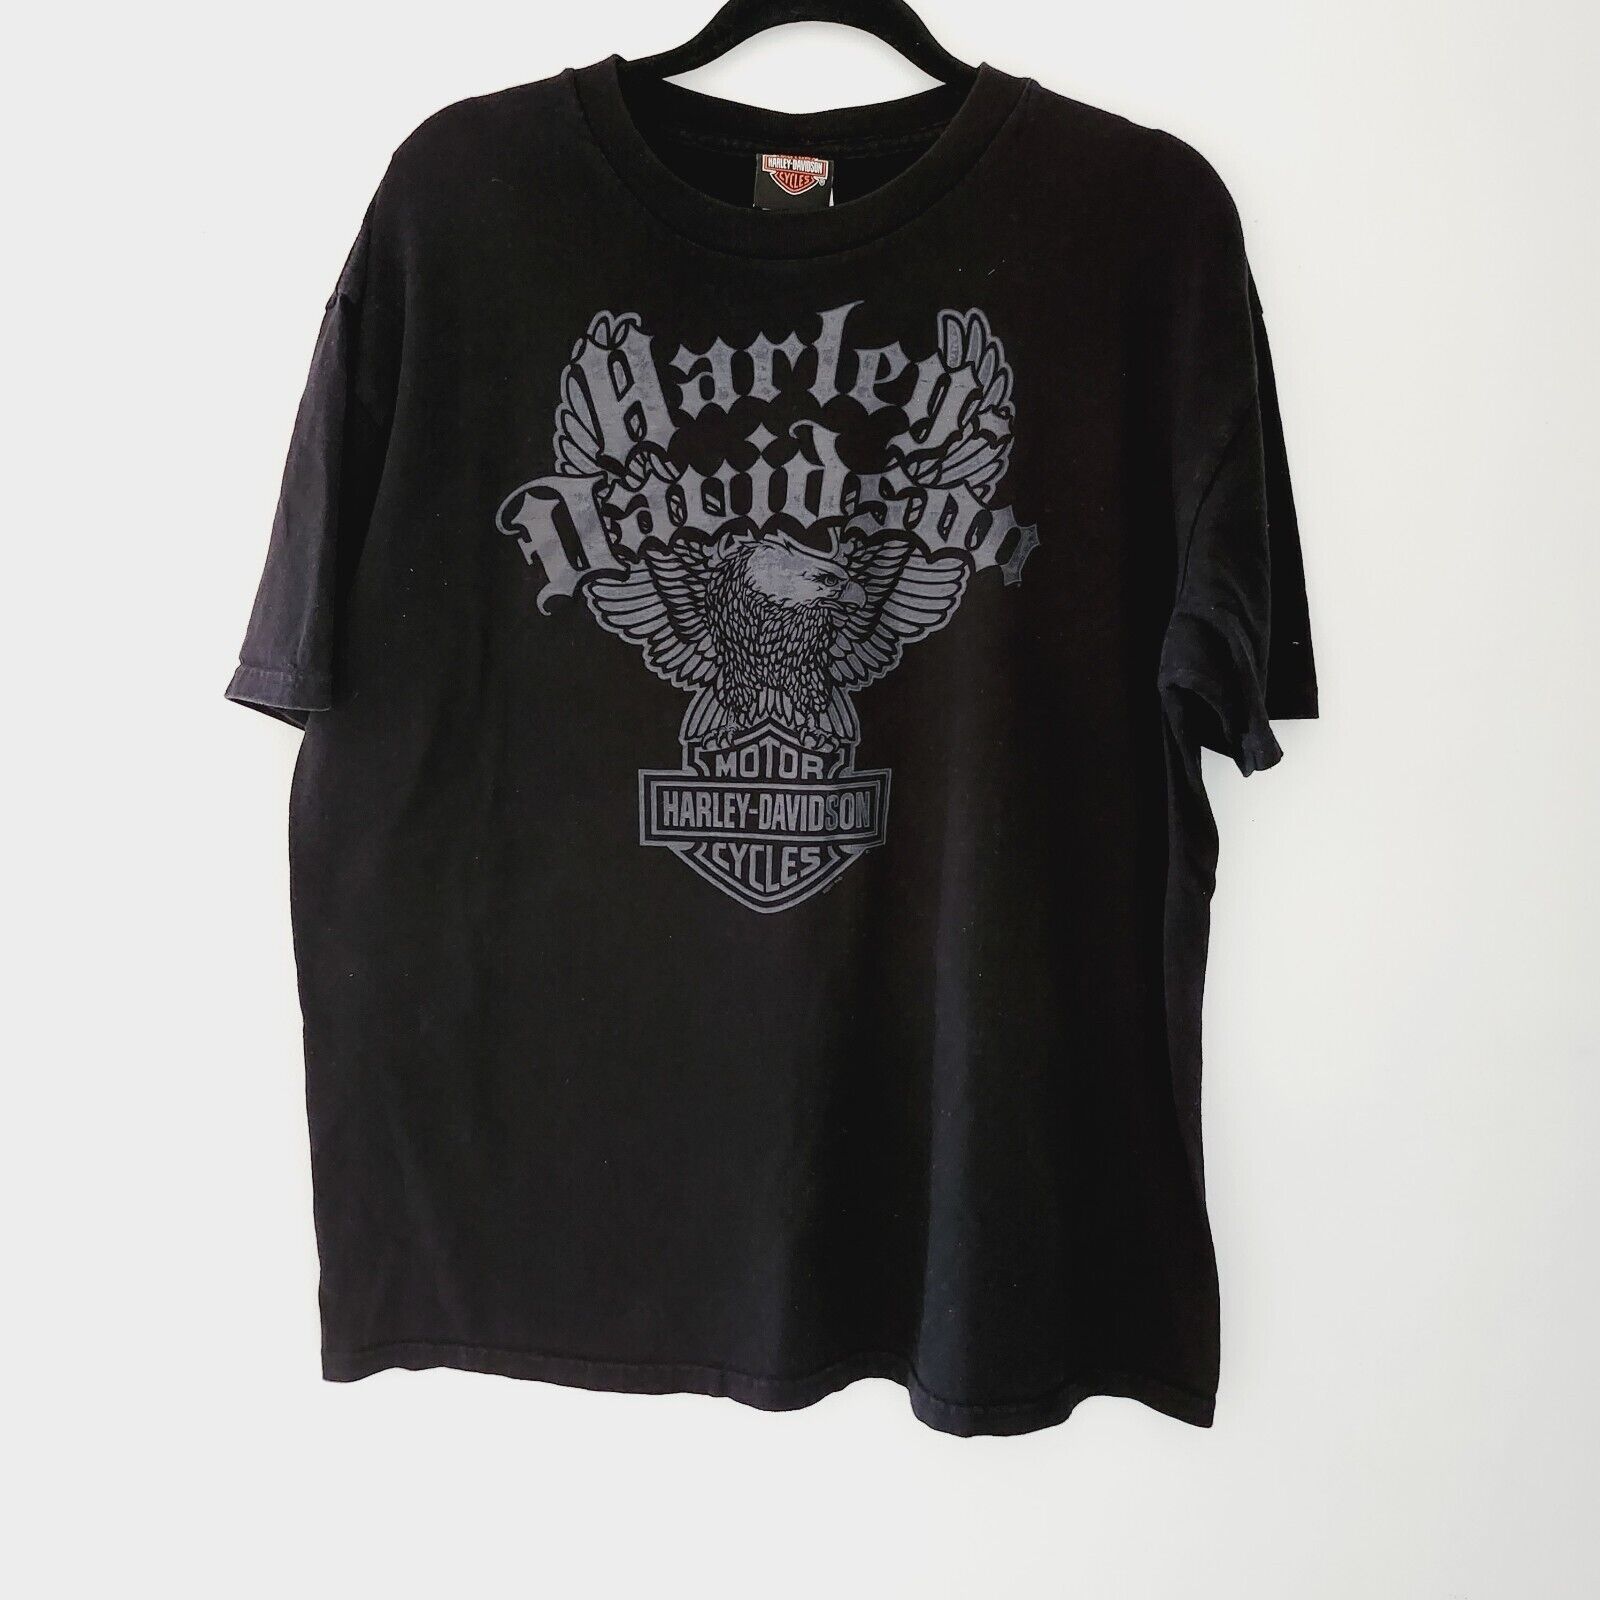 Harley Davidson Lake Shore Libertyville Illinois Men Black T-shirt Size XL